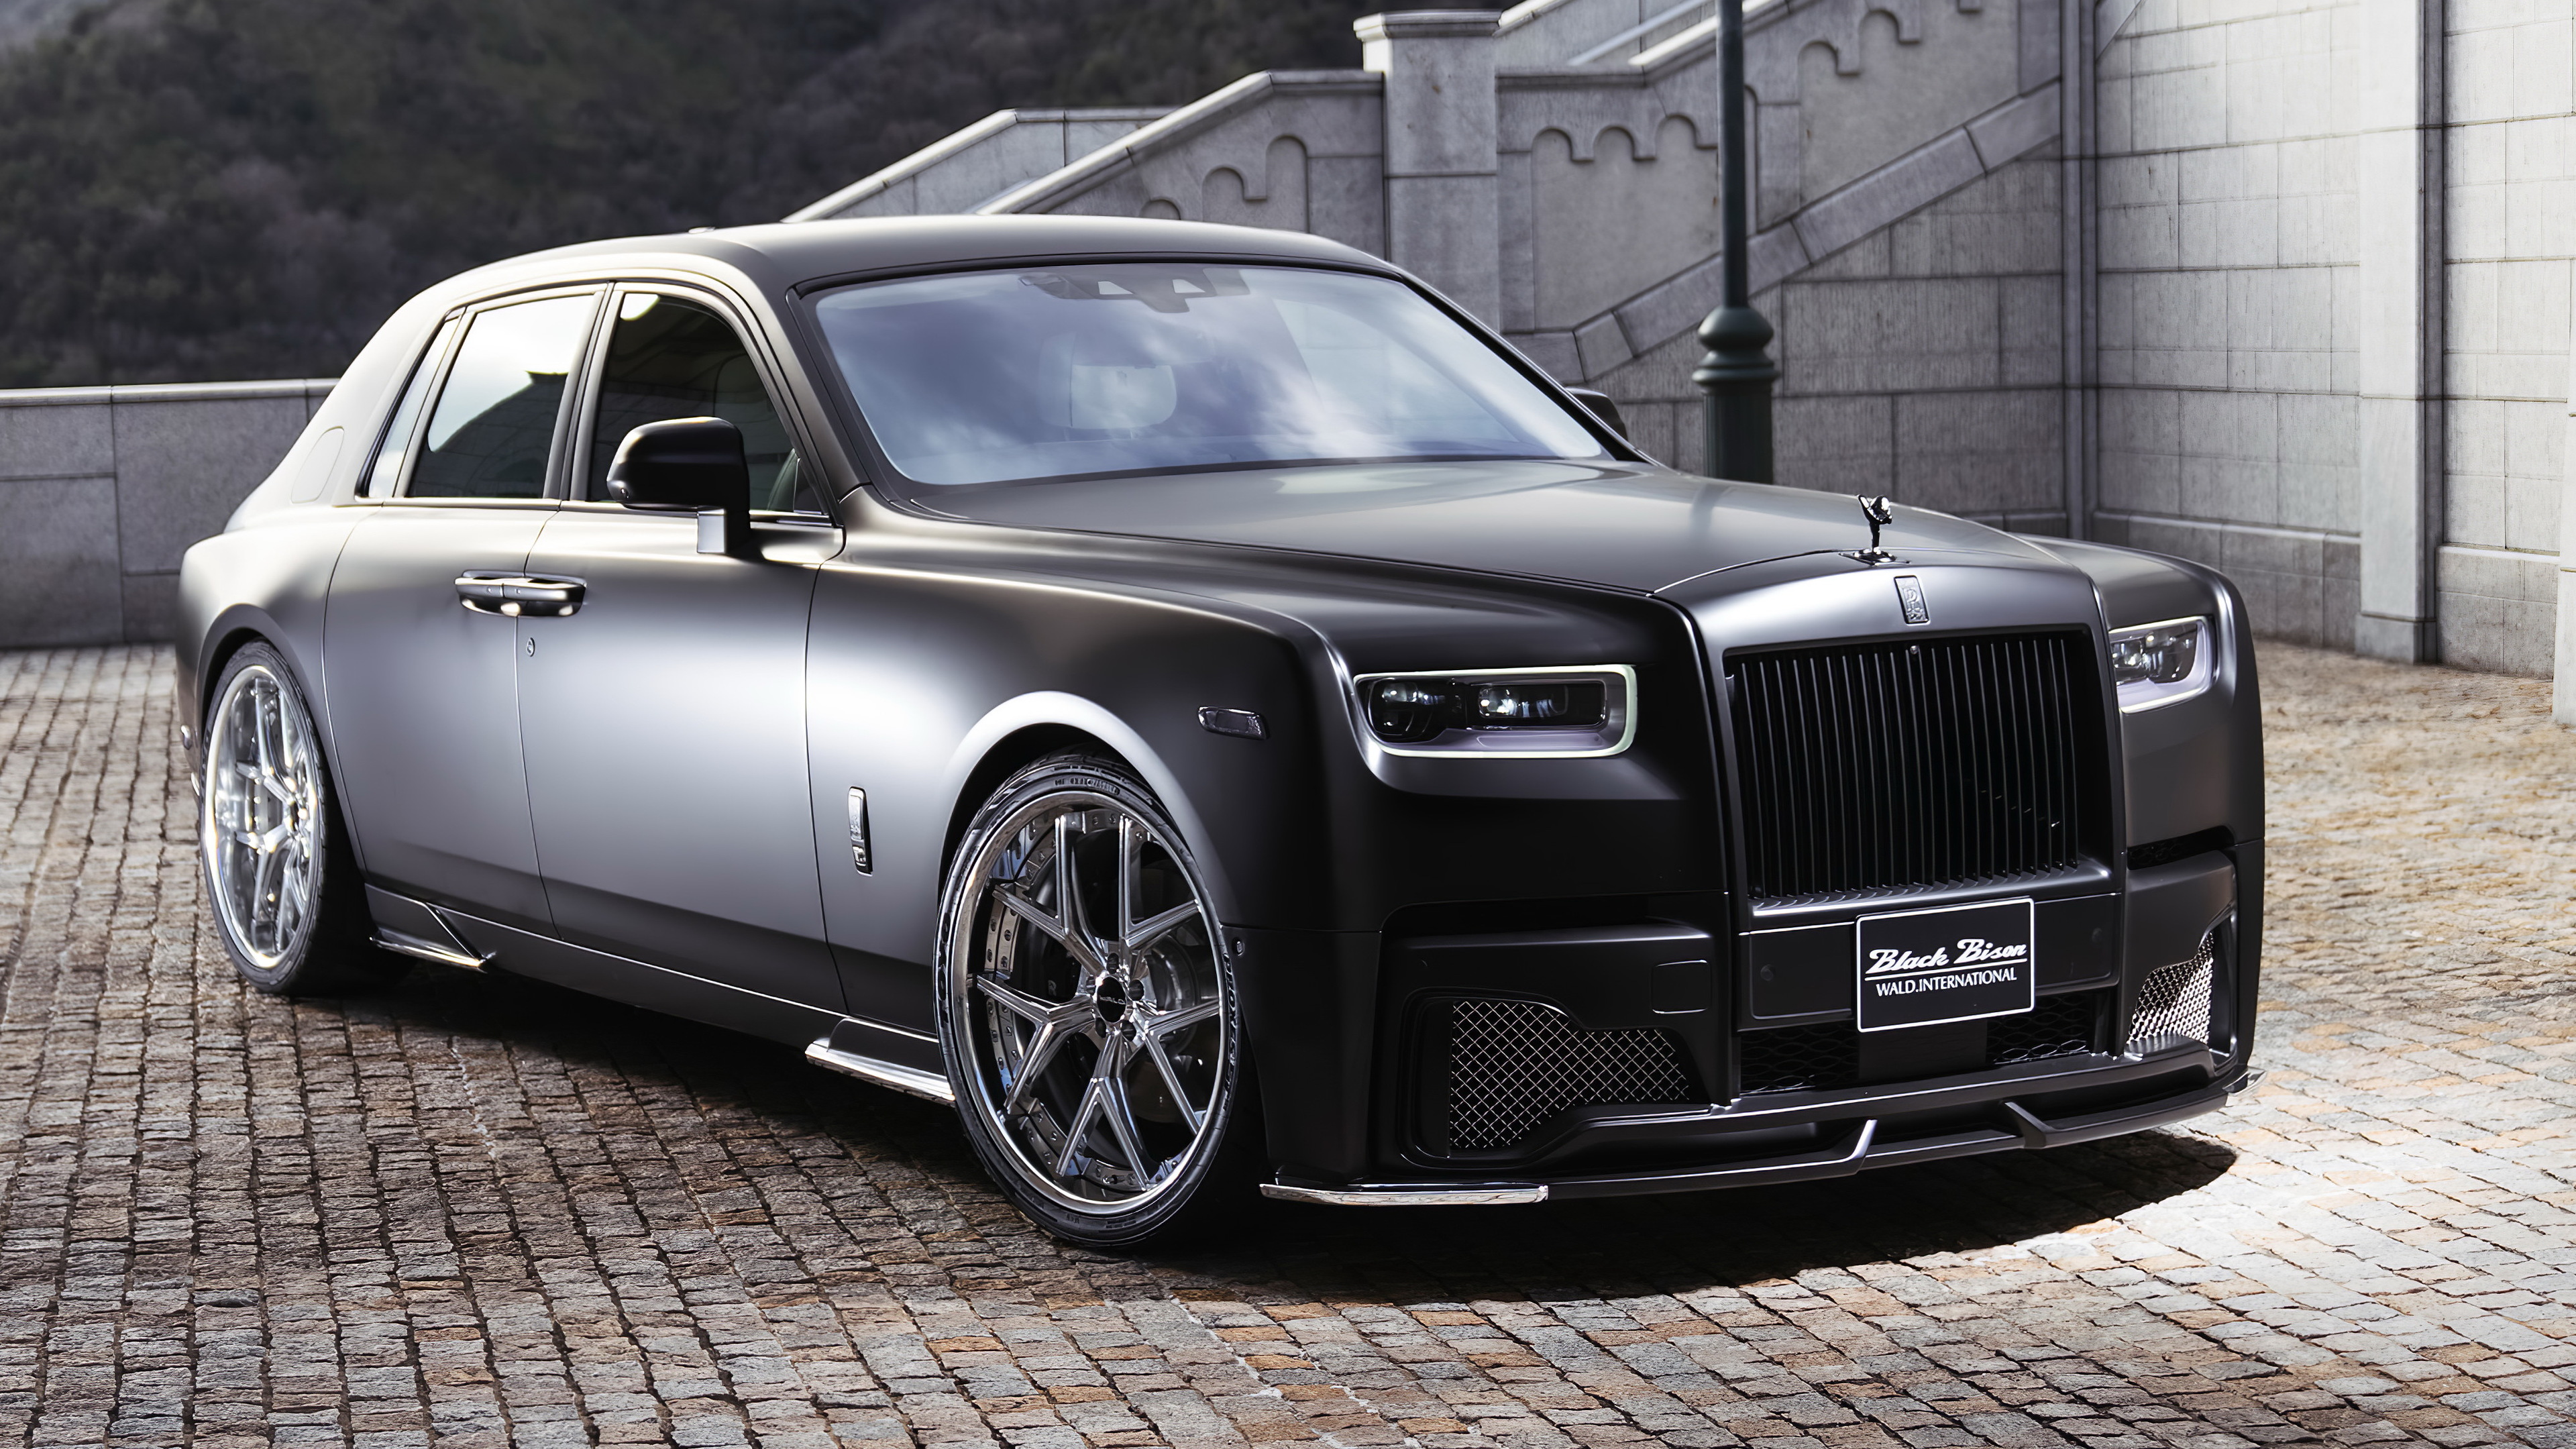 Rolls Royce Phantom Sports Line Black Bison Edition - Rolls Royce Phantom 2019 - HD Wallpaper 